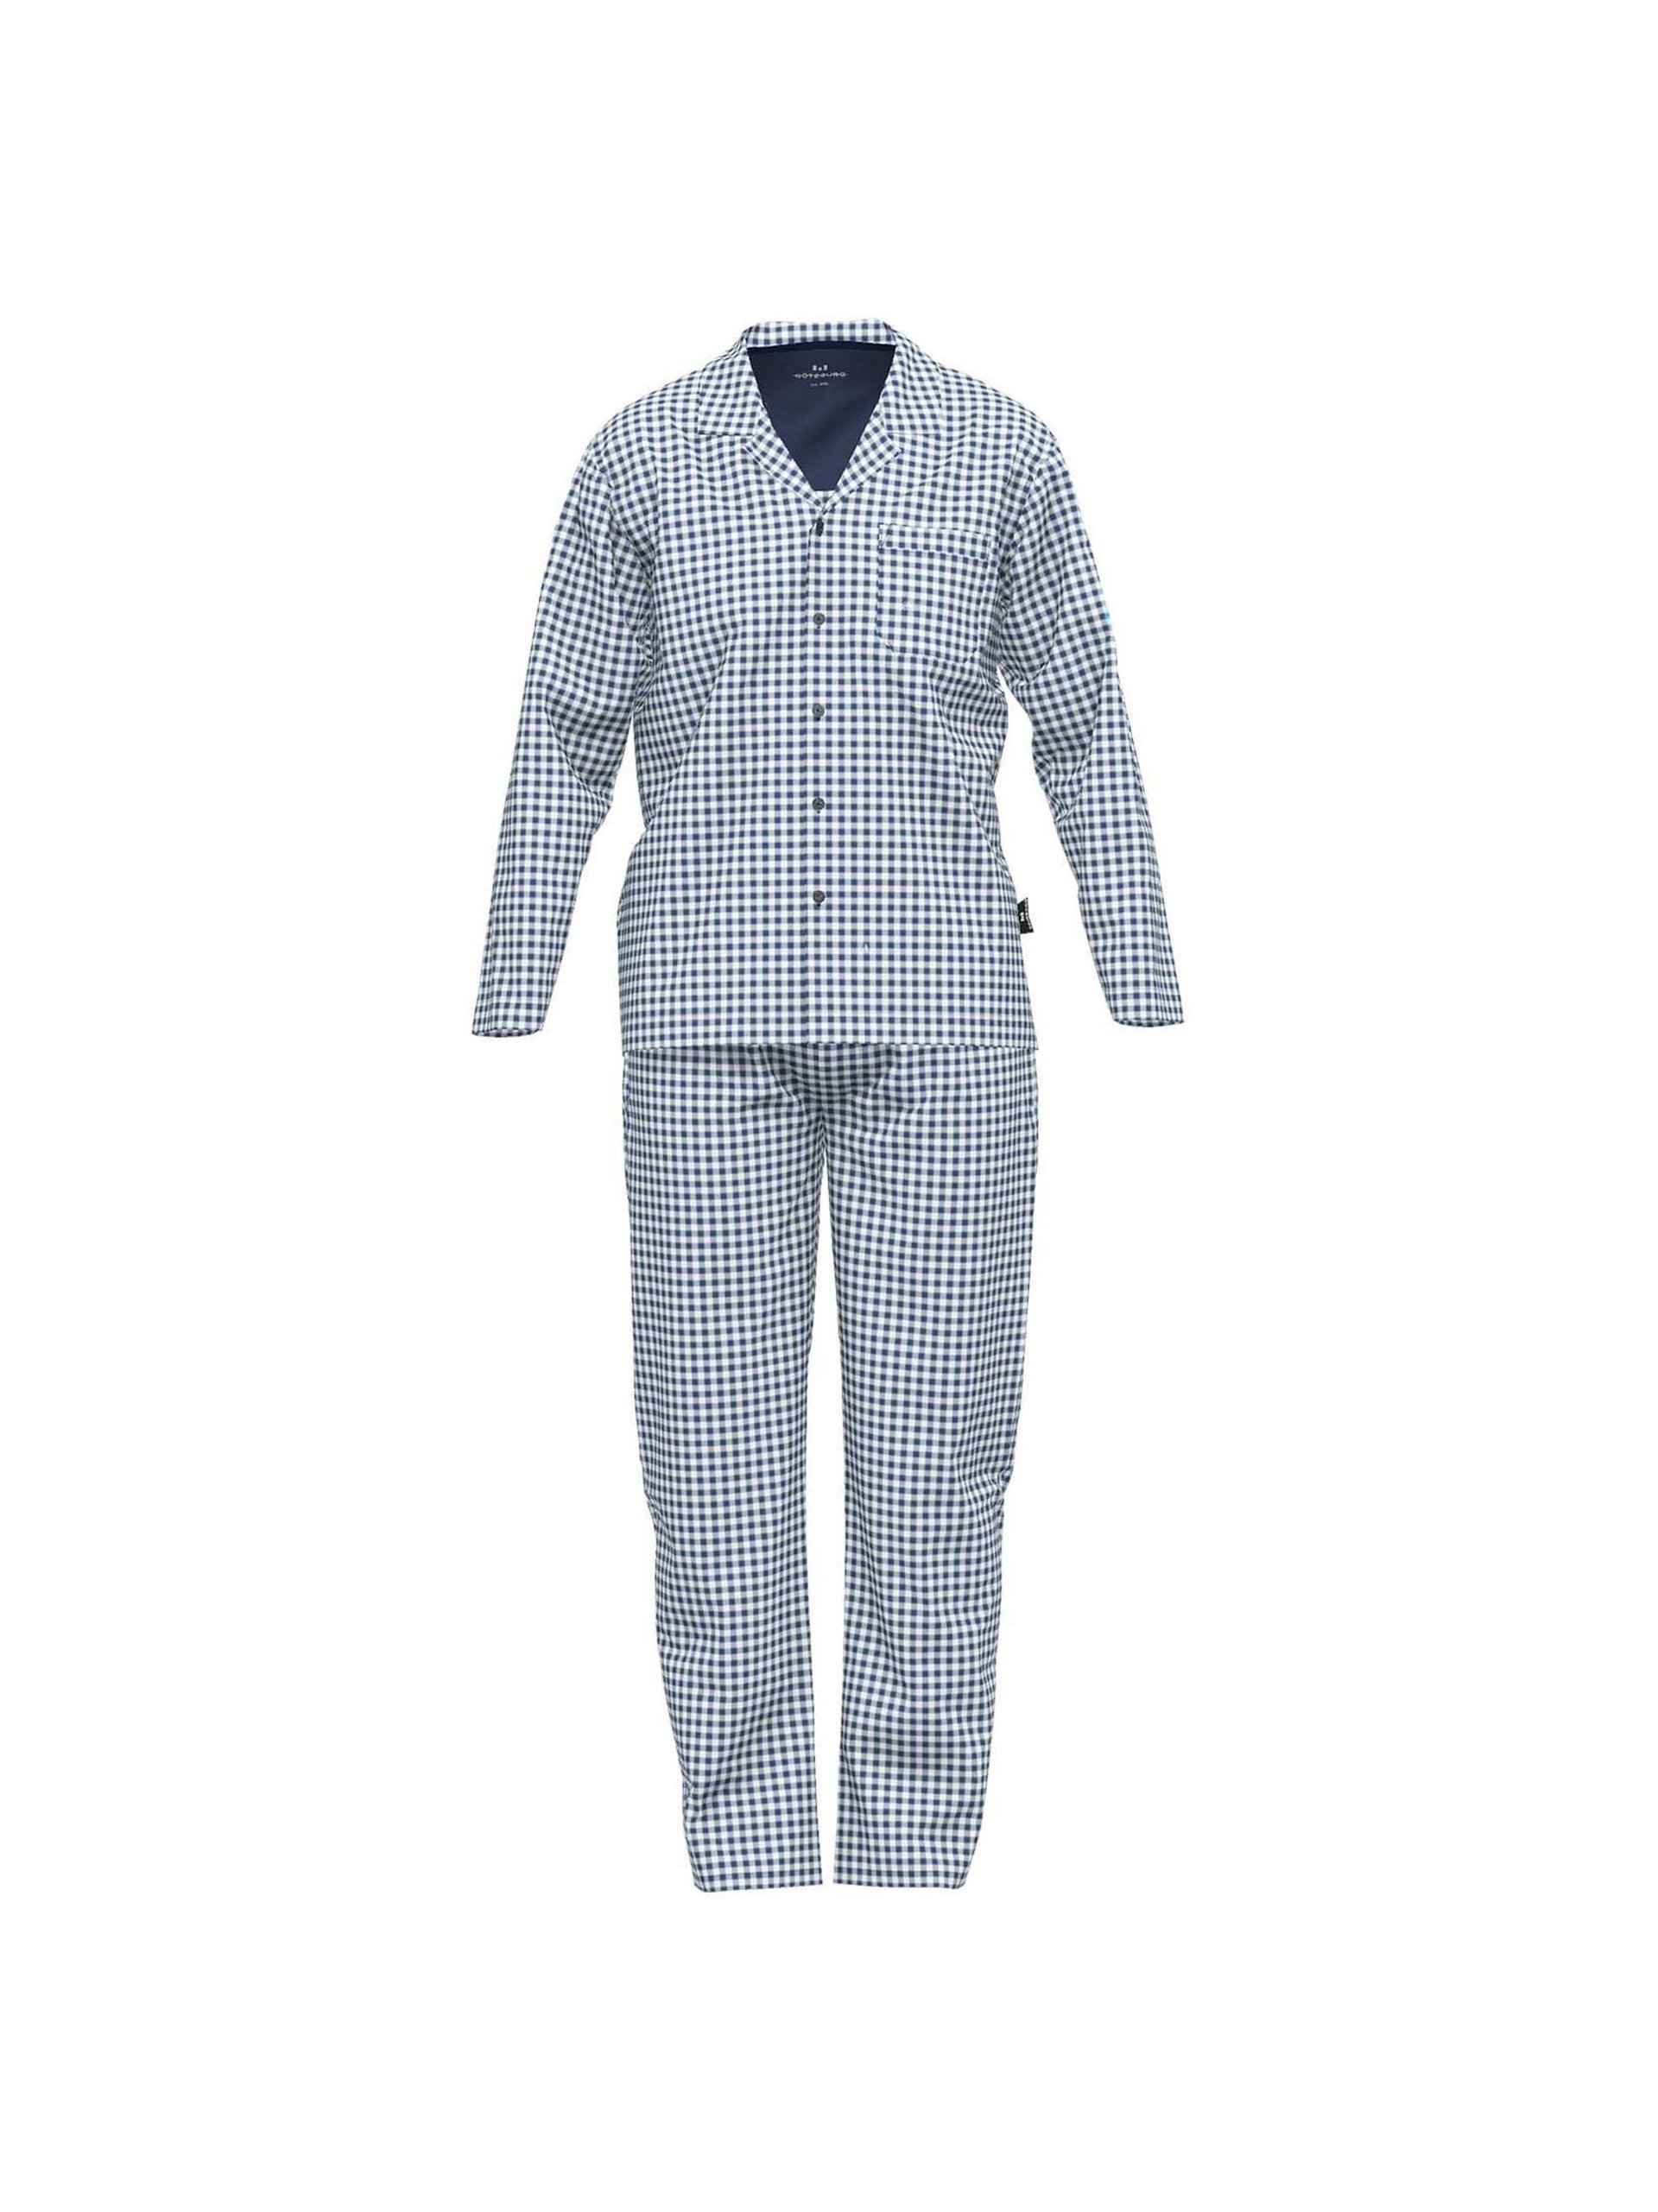 GÖTZBURG Herren Pyjama online kaufen